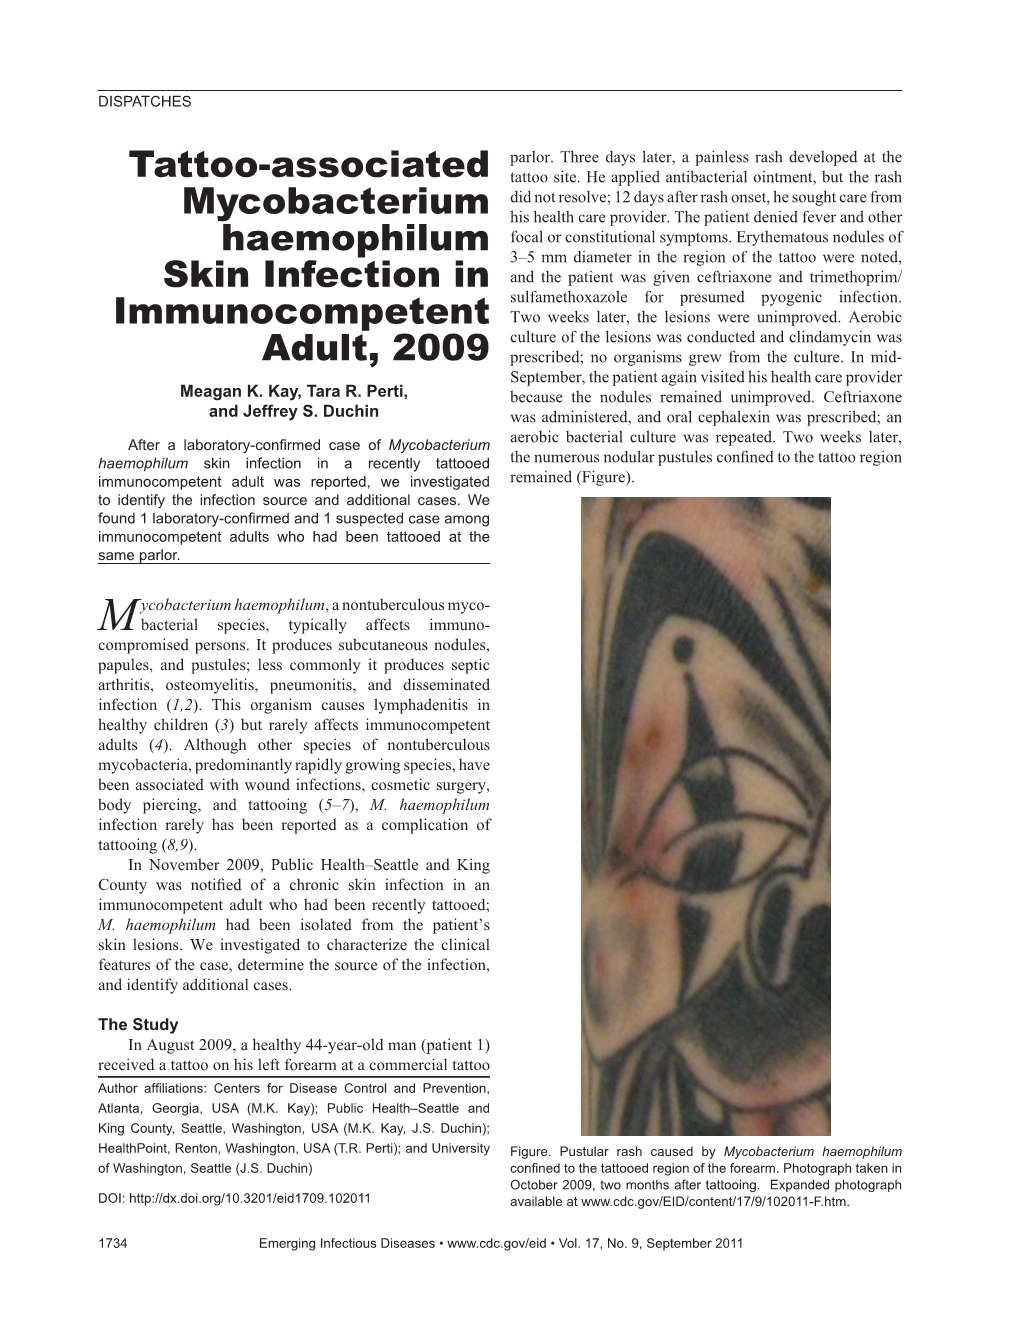 Tattoo-Associated Mycobacterium Haemophilum Skin Infection